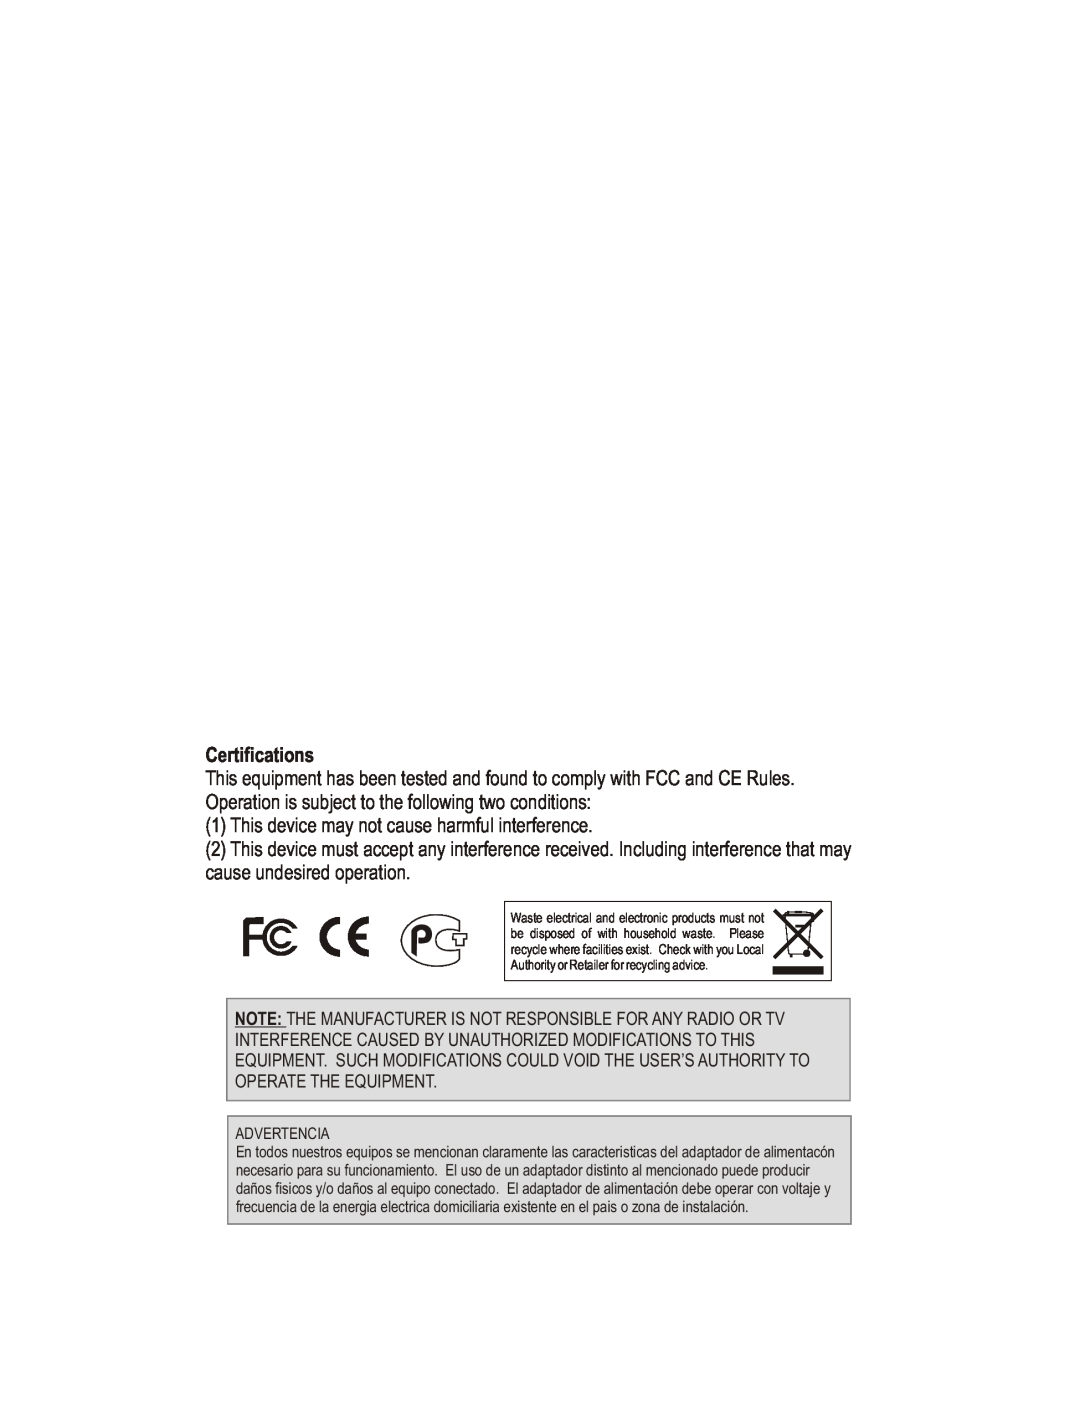 TRENDnet TEW-631BRP manual Certifications 